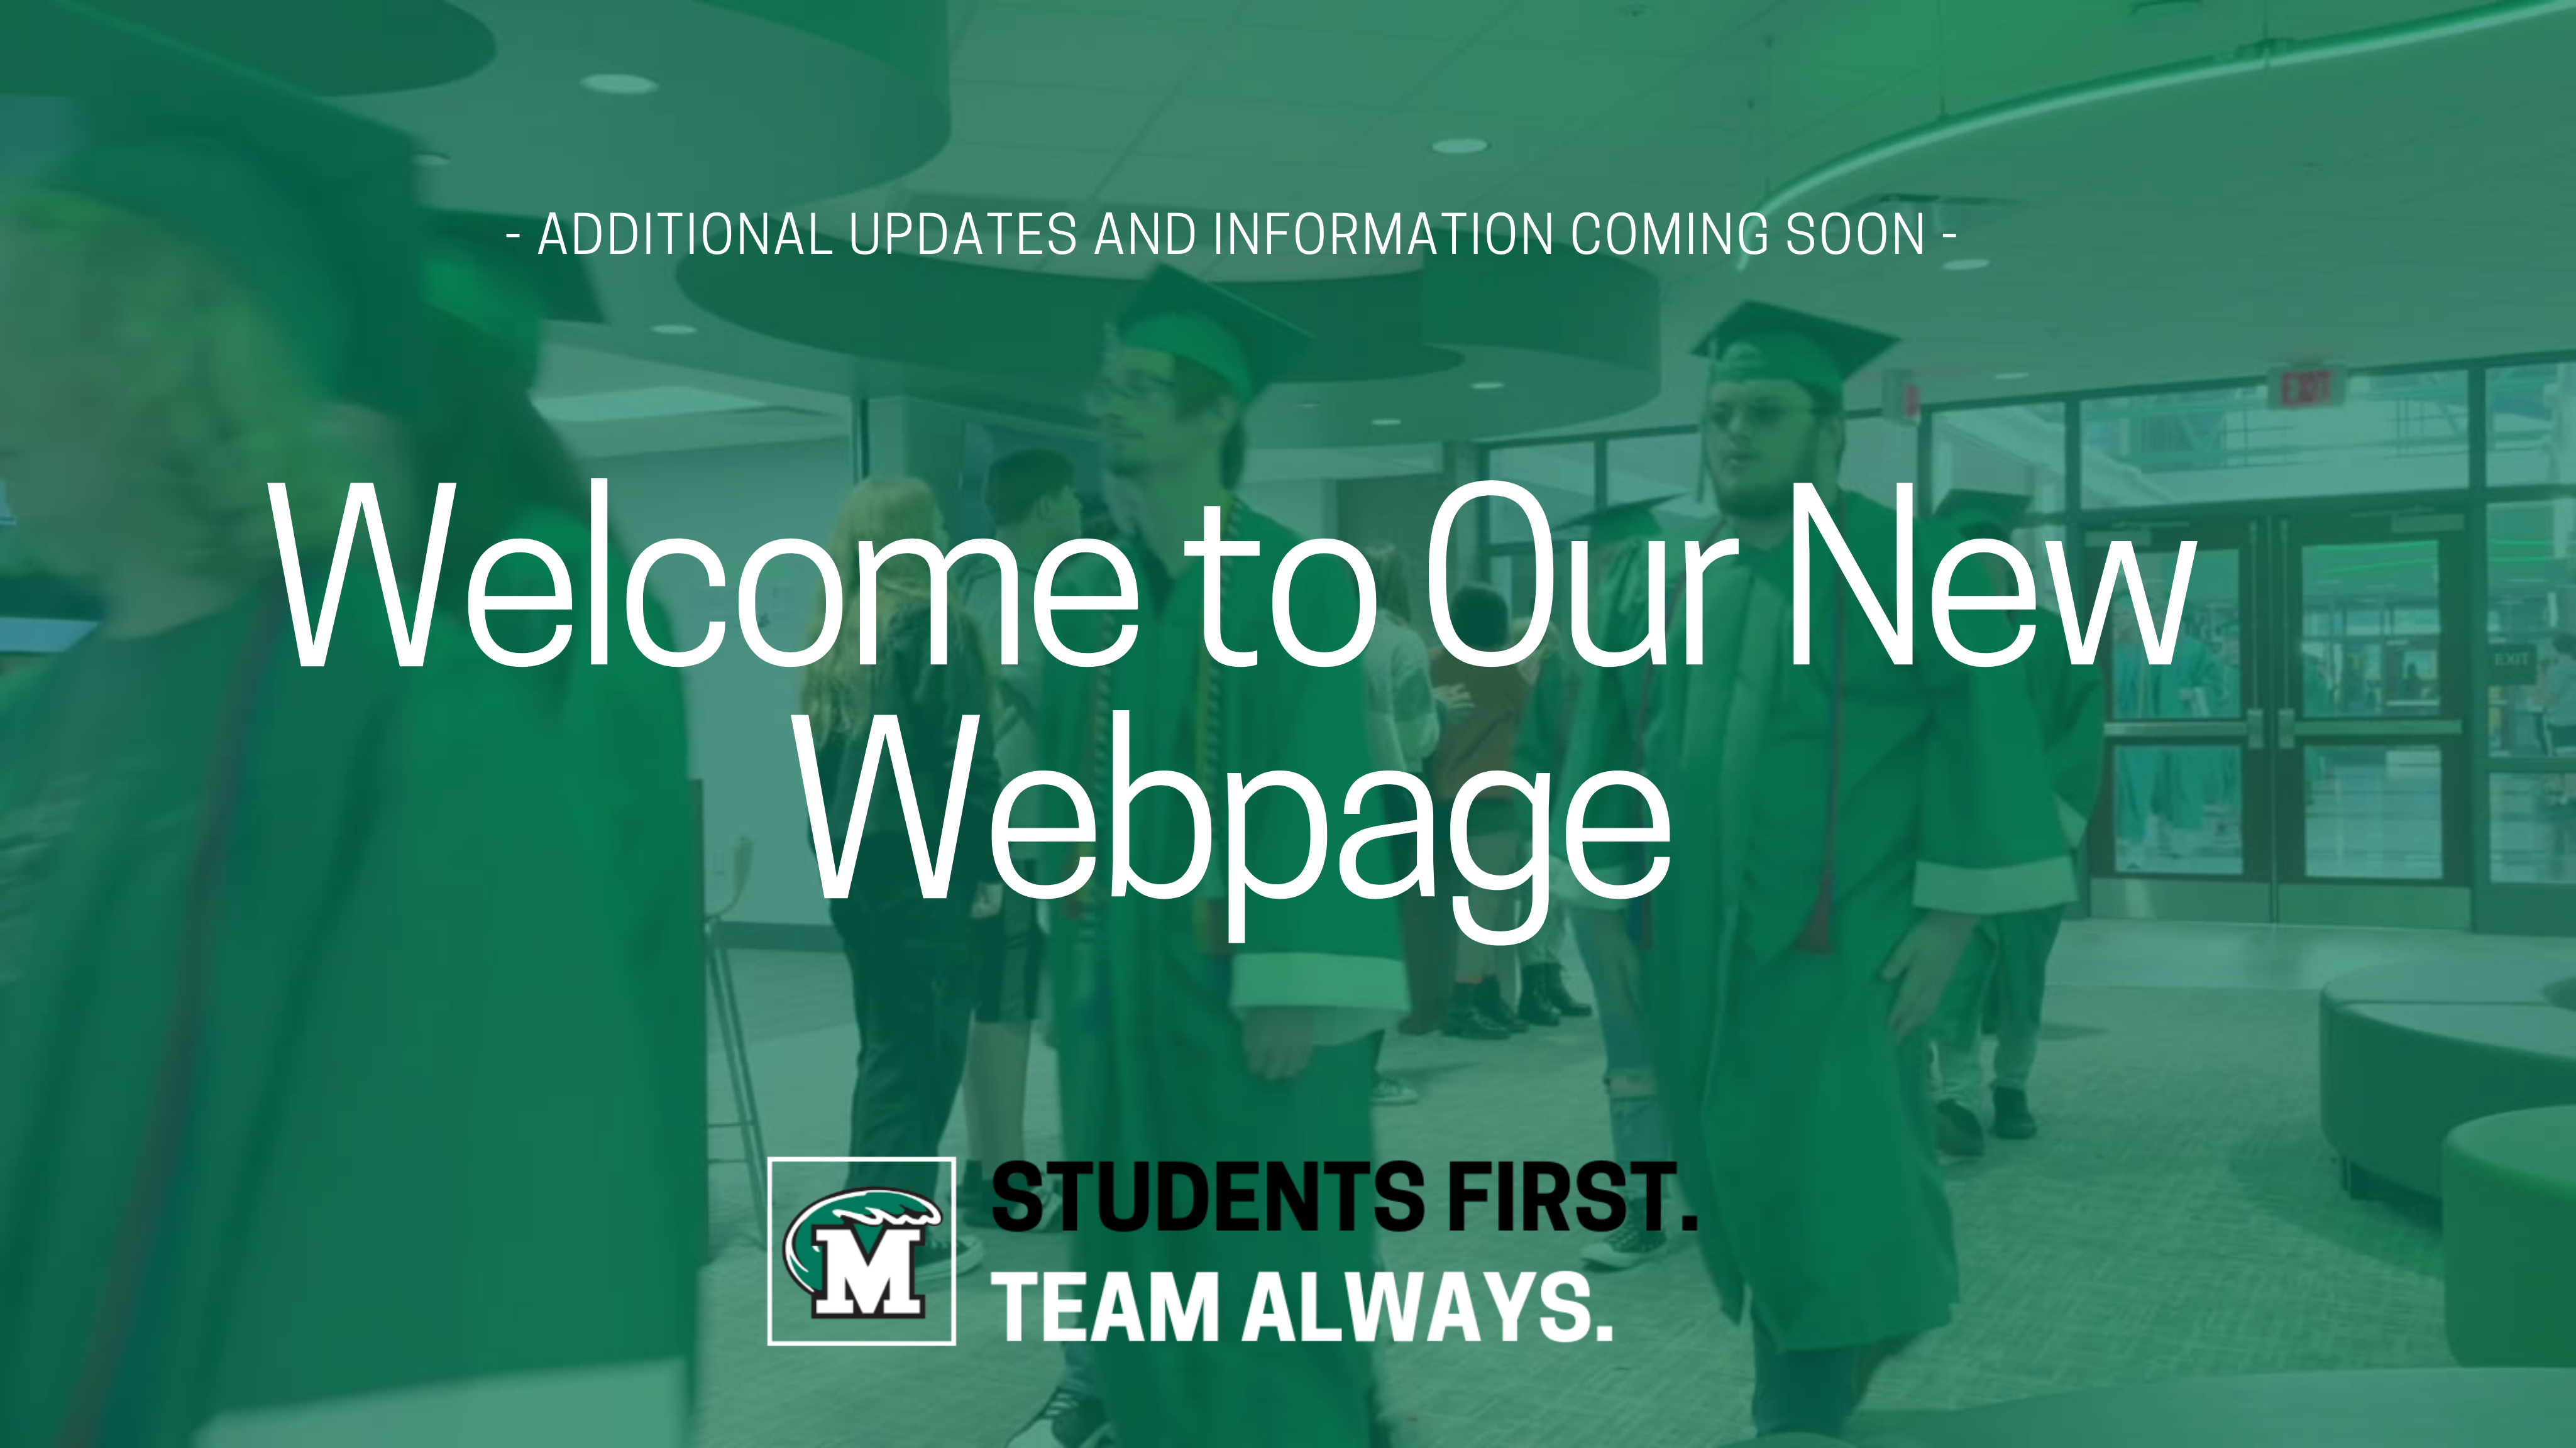 Webpage Welcome